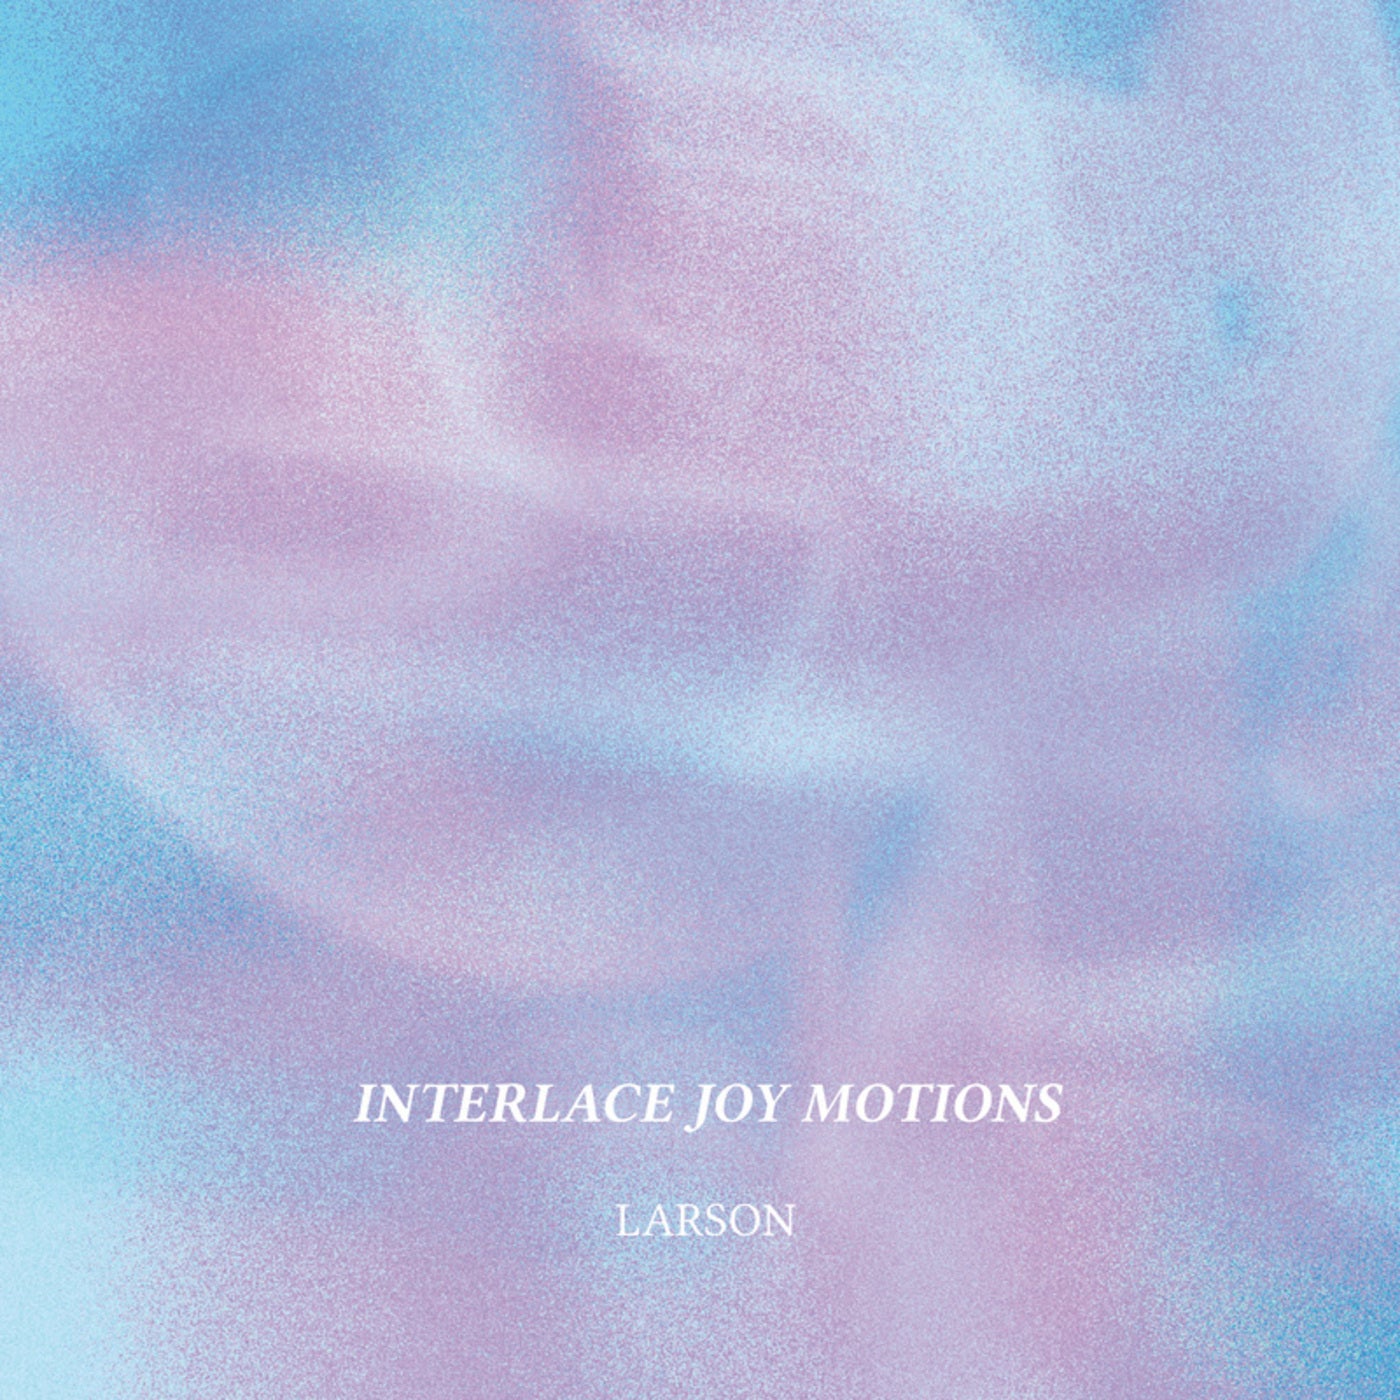 Interlace Joy Motions